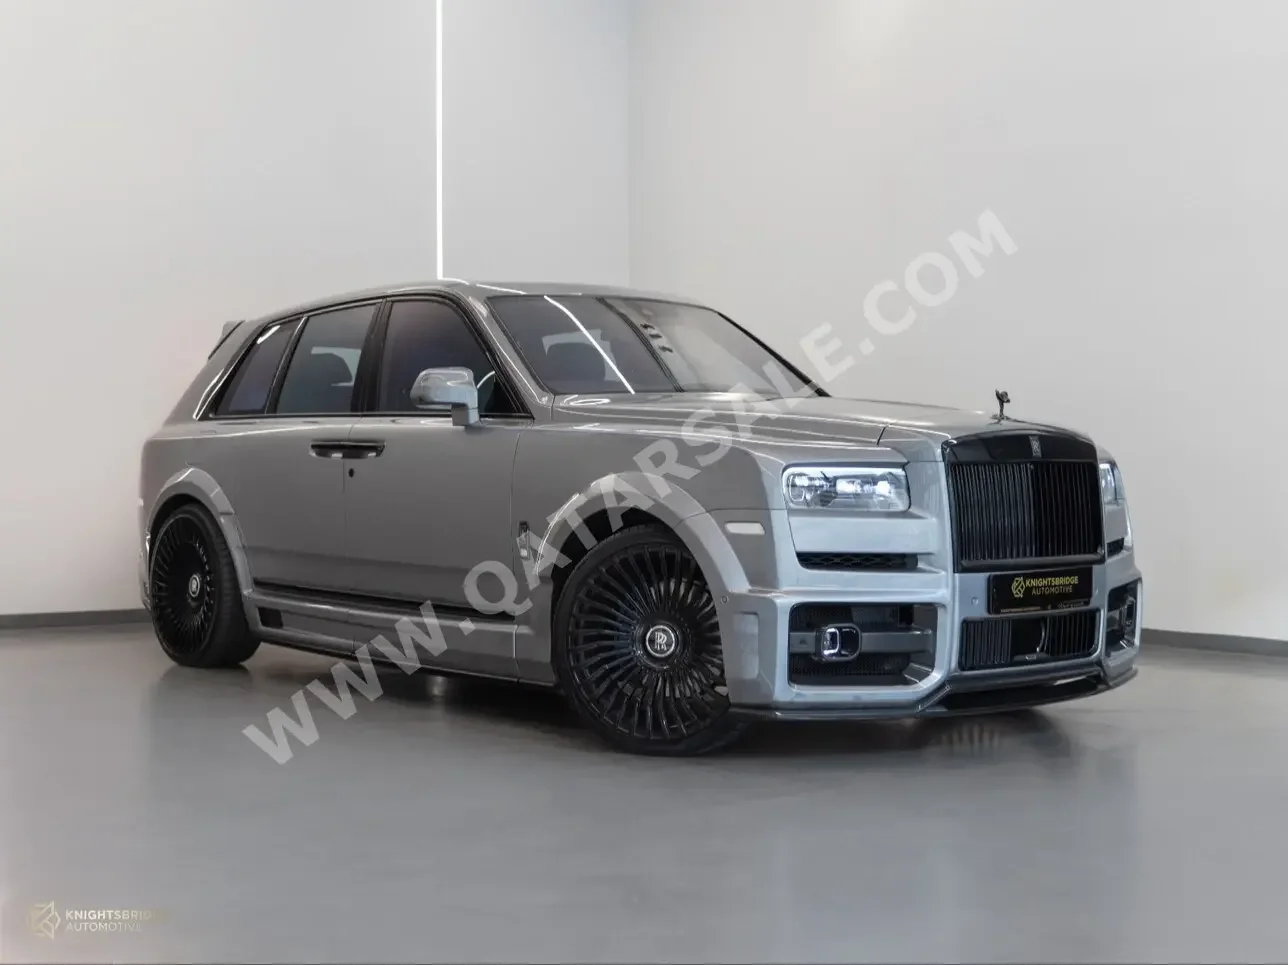  Rolls-Royce  Cullinan  Urban  2023  Automatic  15,900 Km  12 Cylinder  Four Wheel Drive (4WD)  SUV  Gray  With Warranty